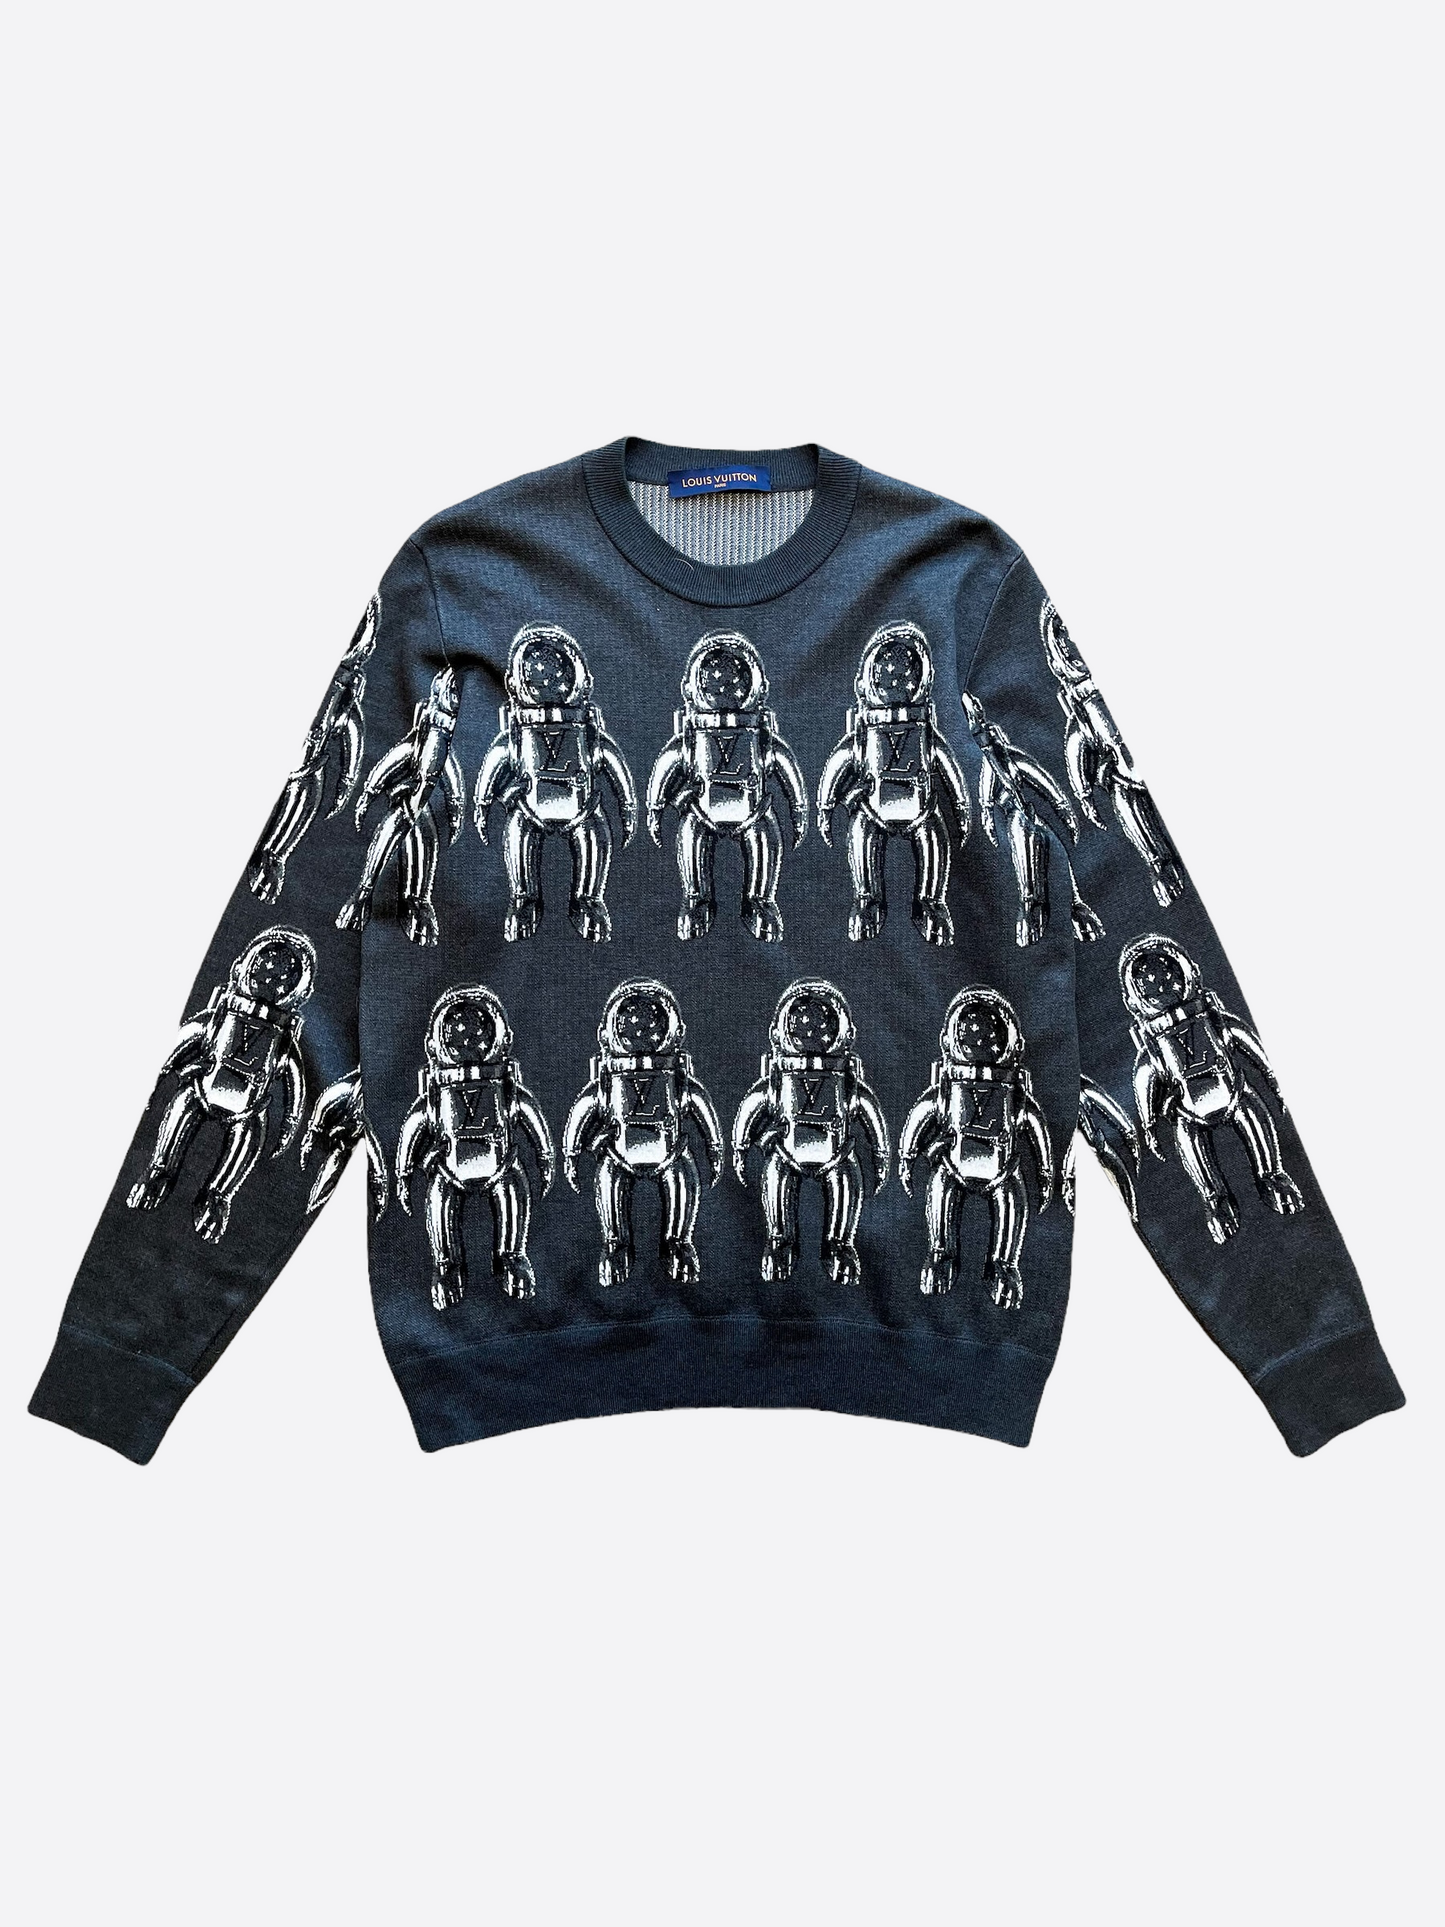 Louis Vuitton Astronaut Sweater